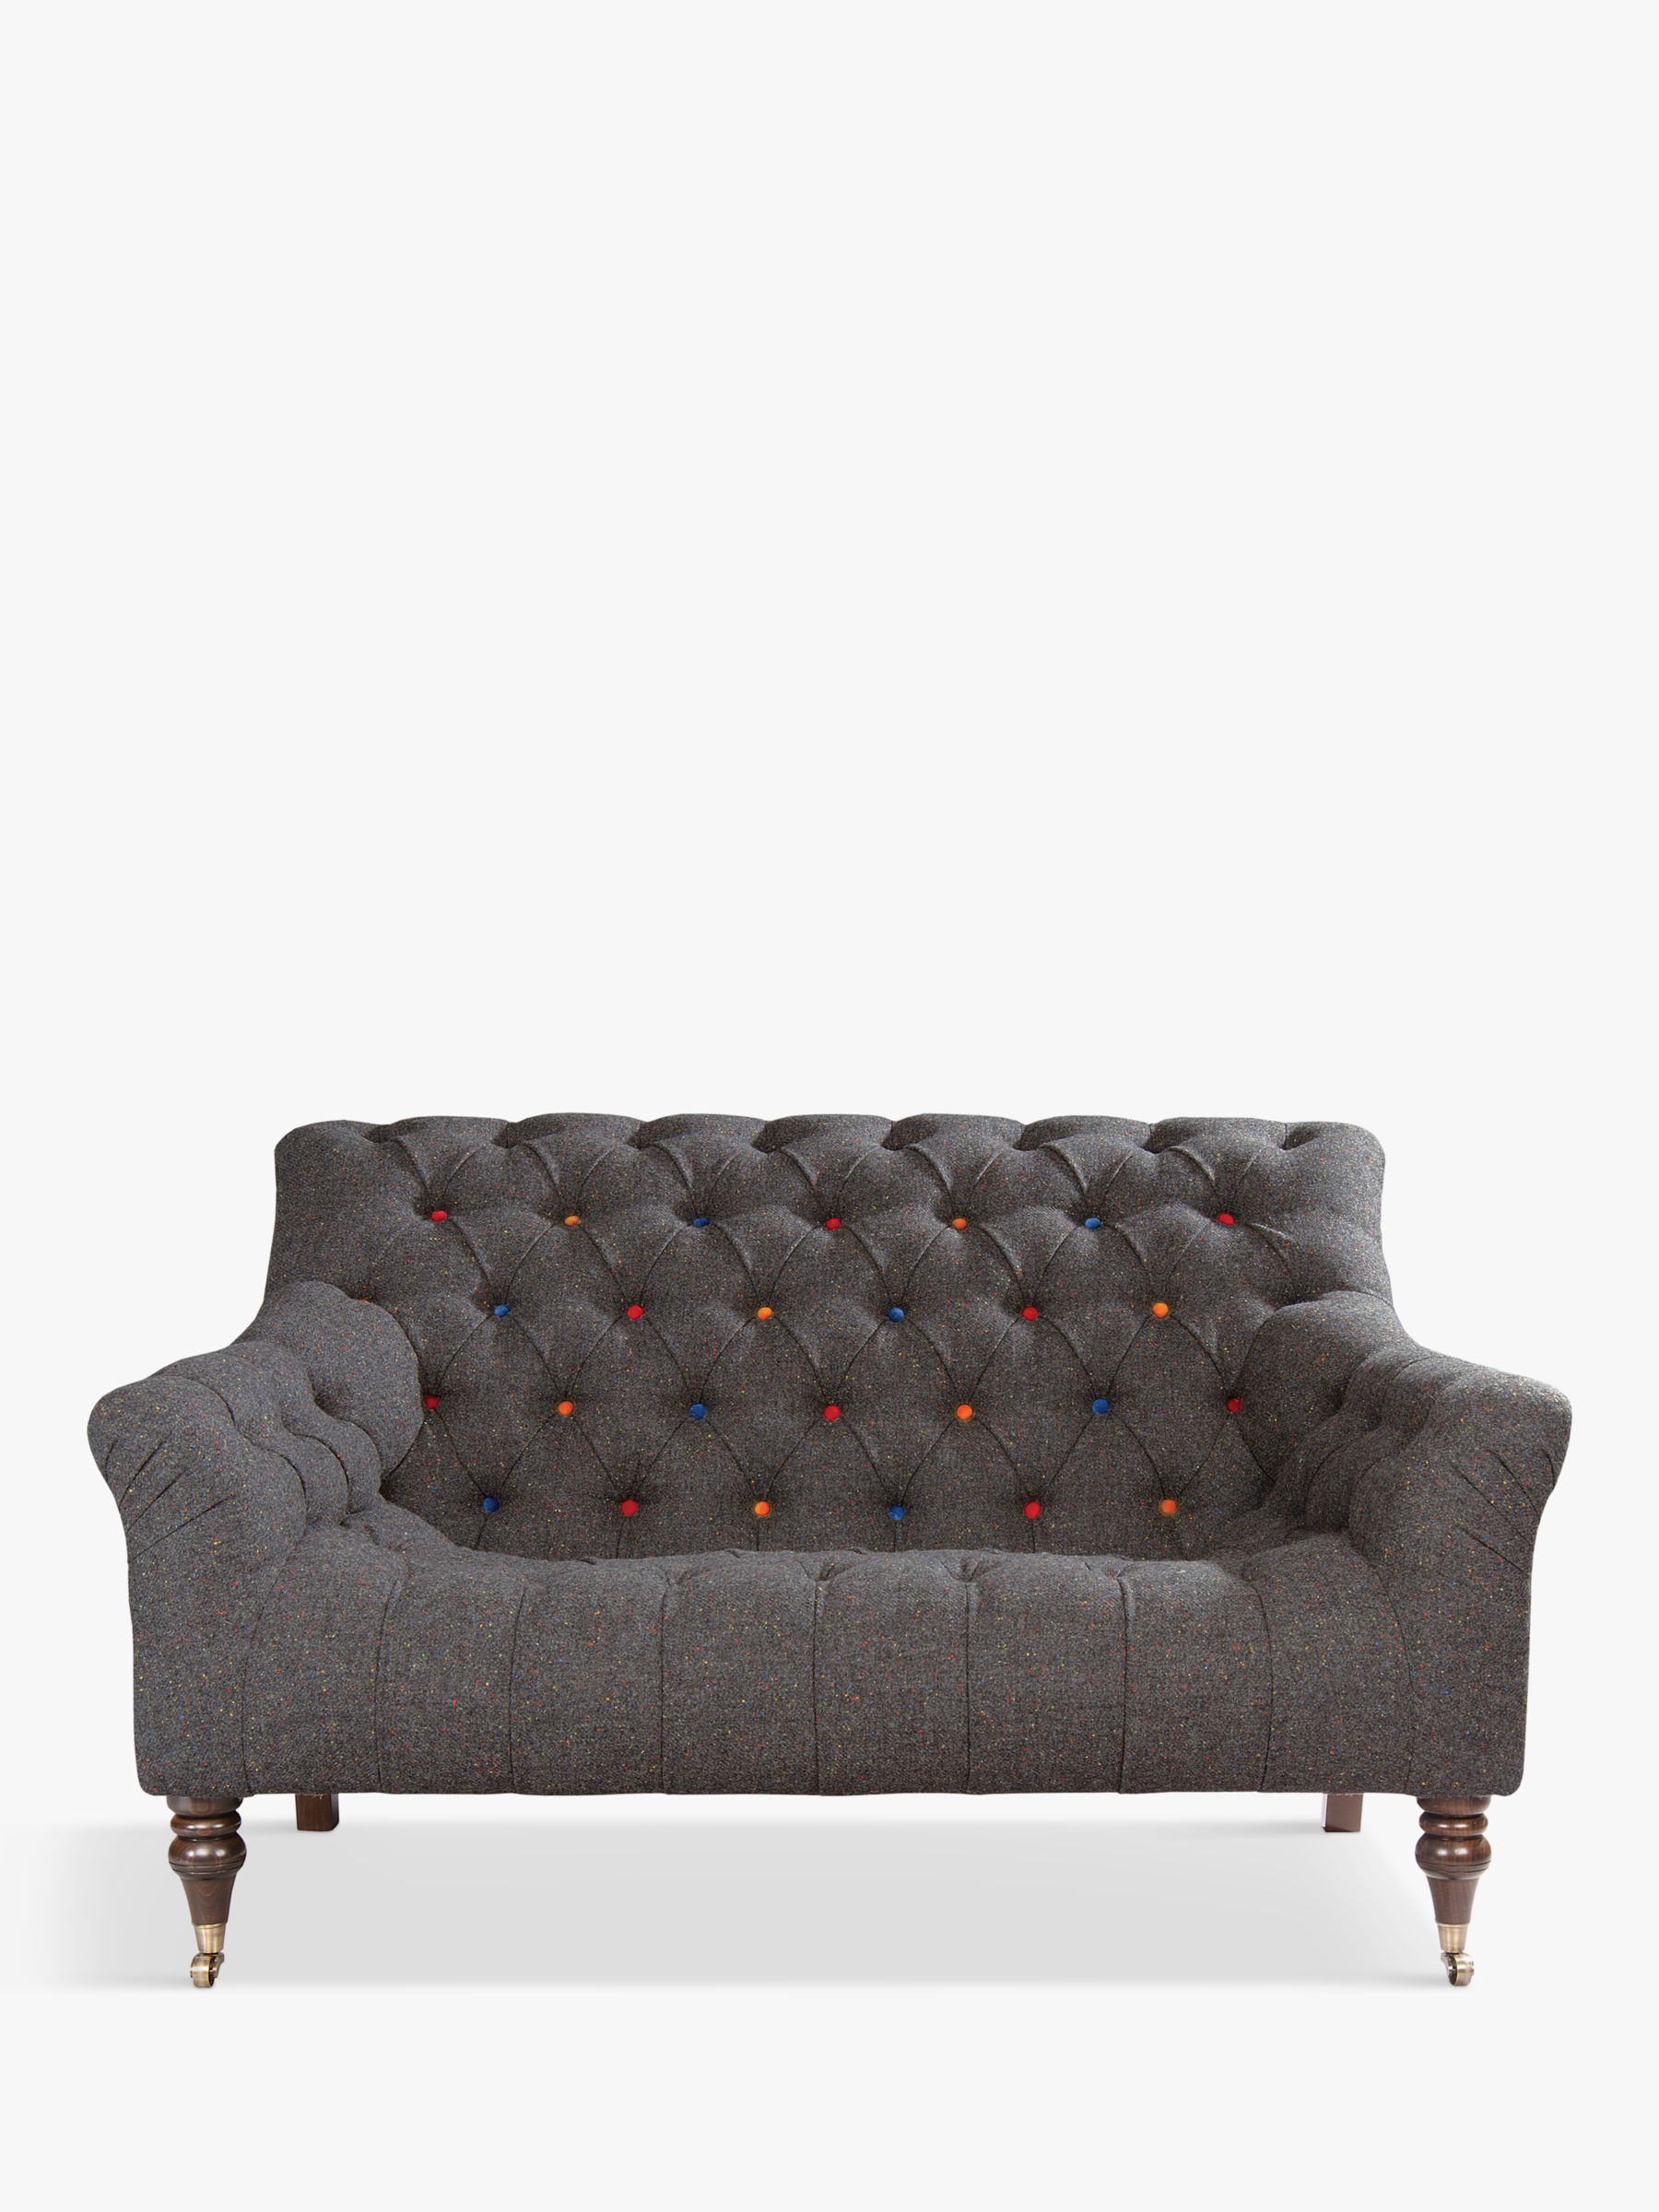 Photo of Tetrad skittle petite 2 seater sofa